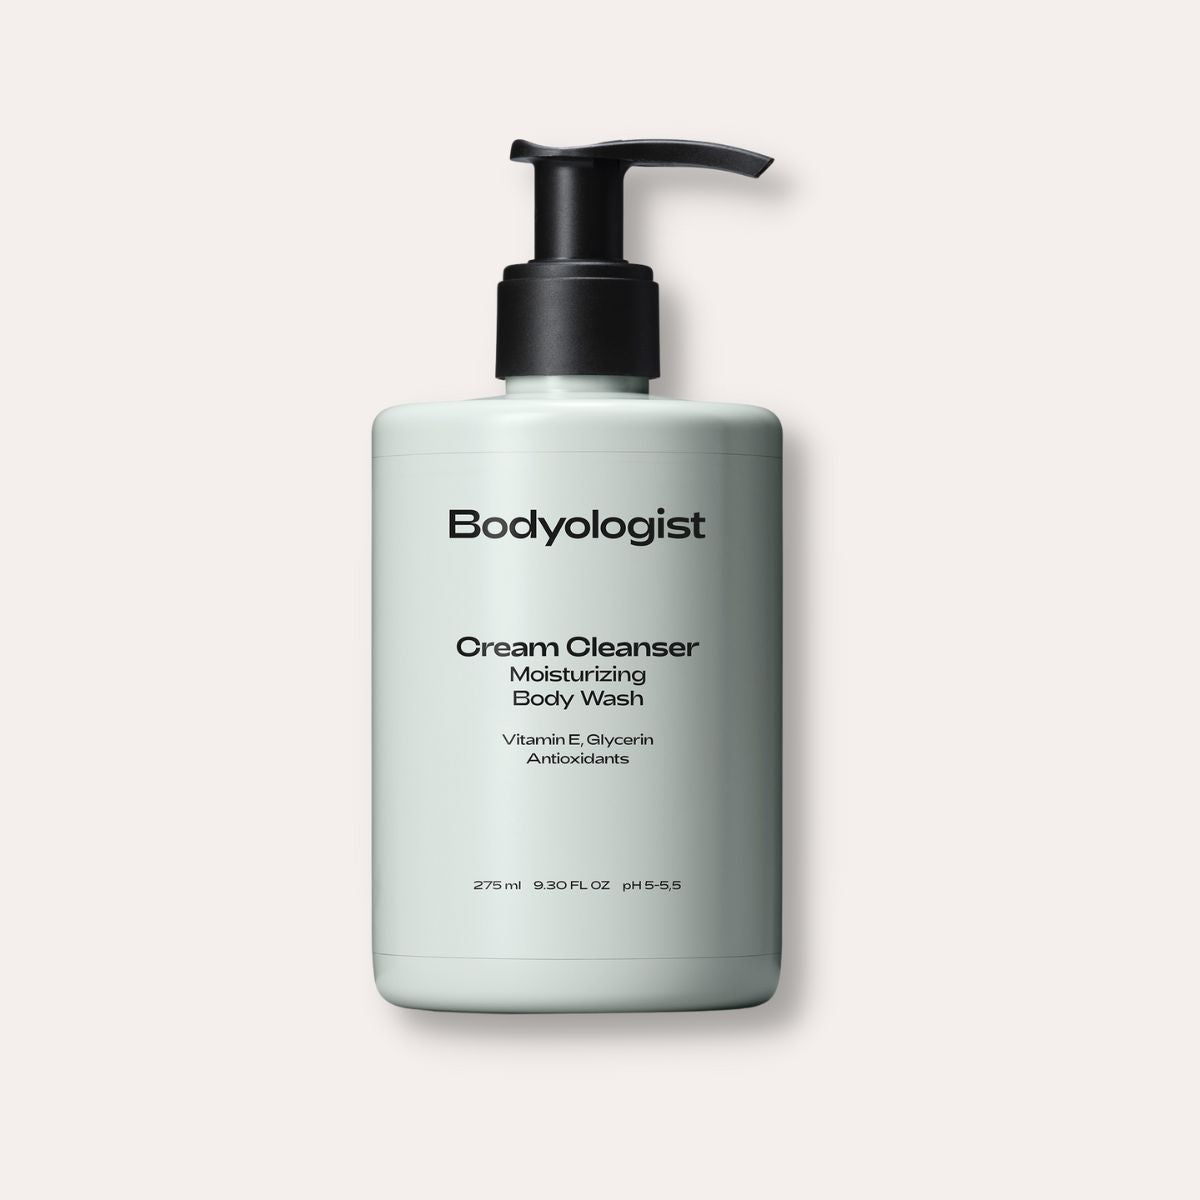 Bodyologist Cream Cleanser Moisturizing Body Wash - Sara Lorentsen Skin Expert